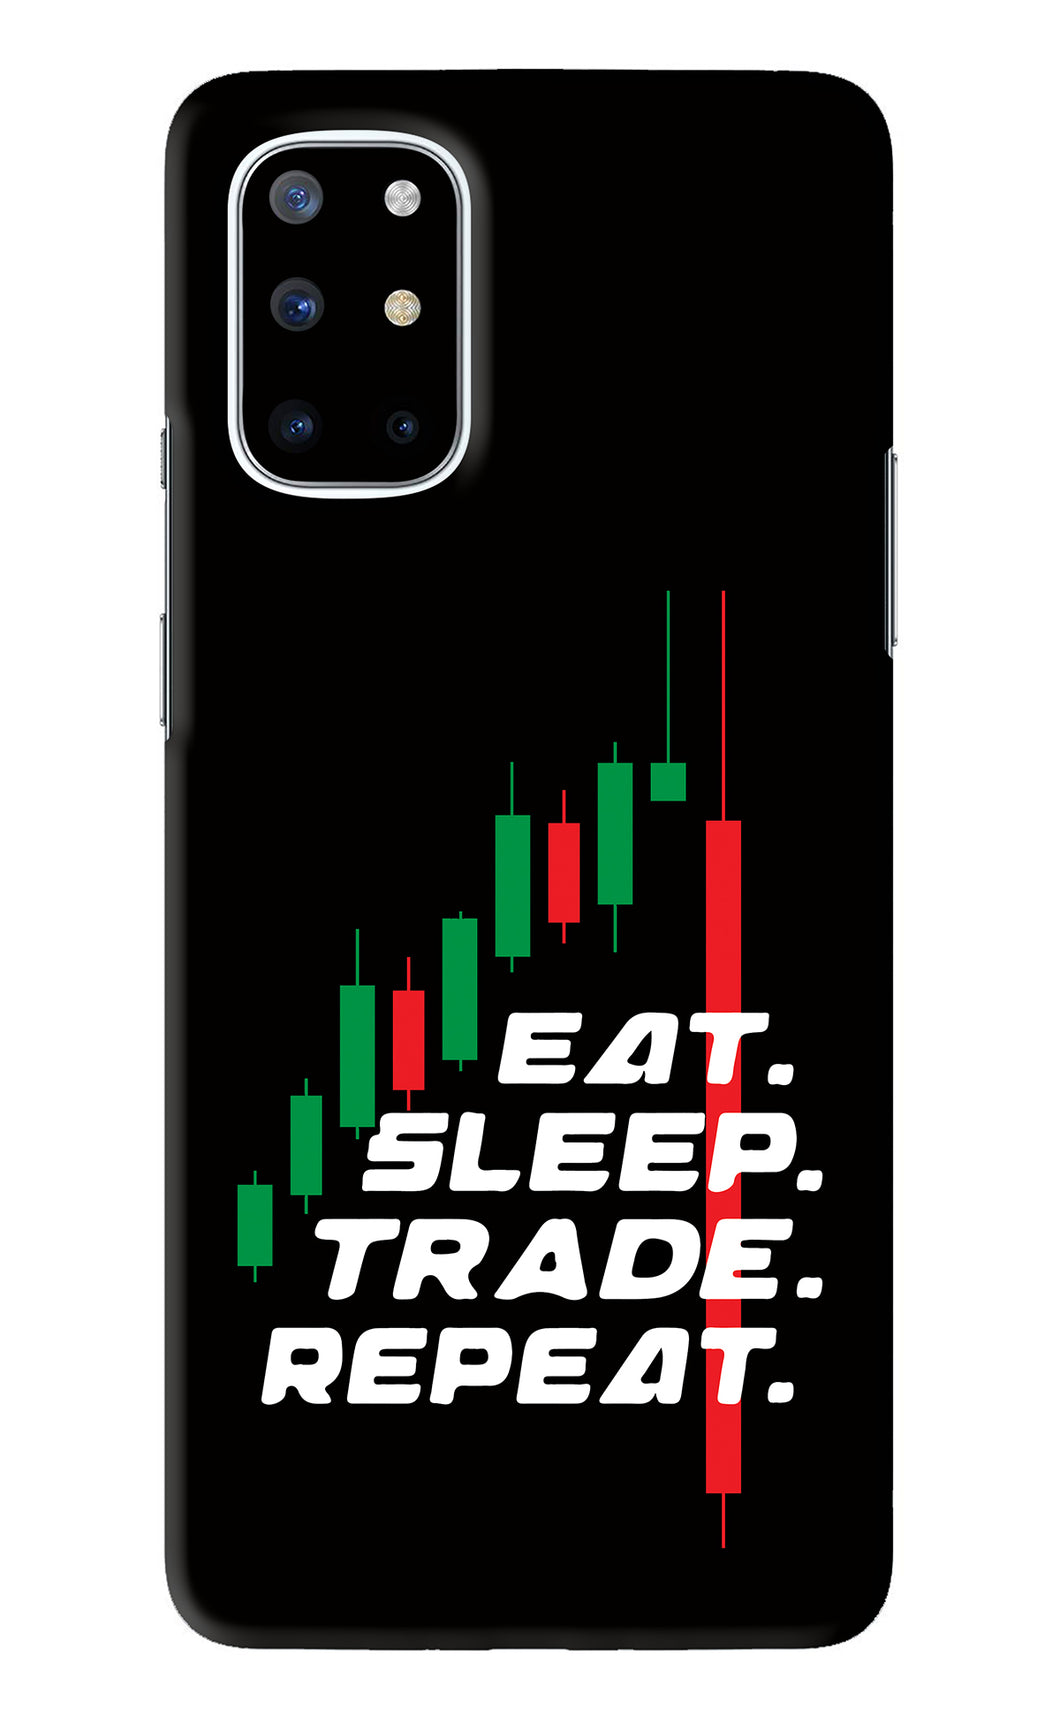 Eat Sleep Trade Repeat OnePlus 8T Back Skin Wrap